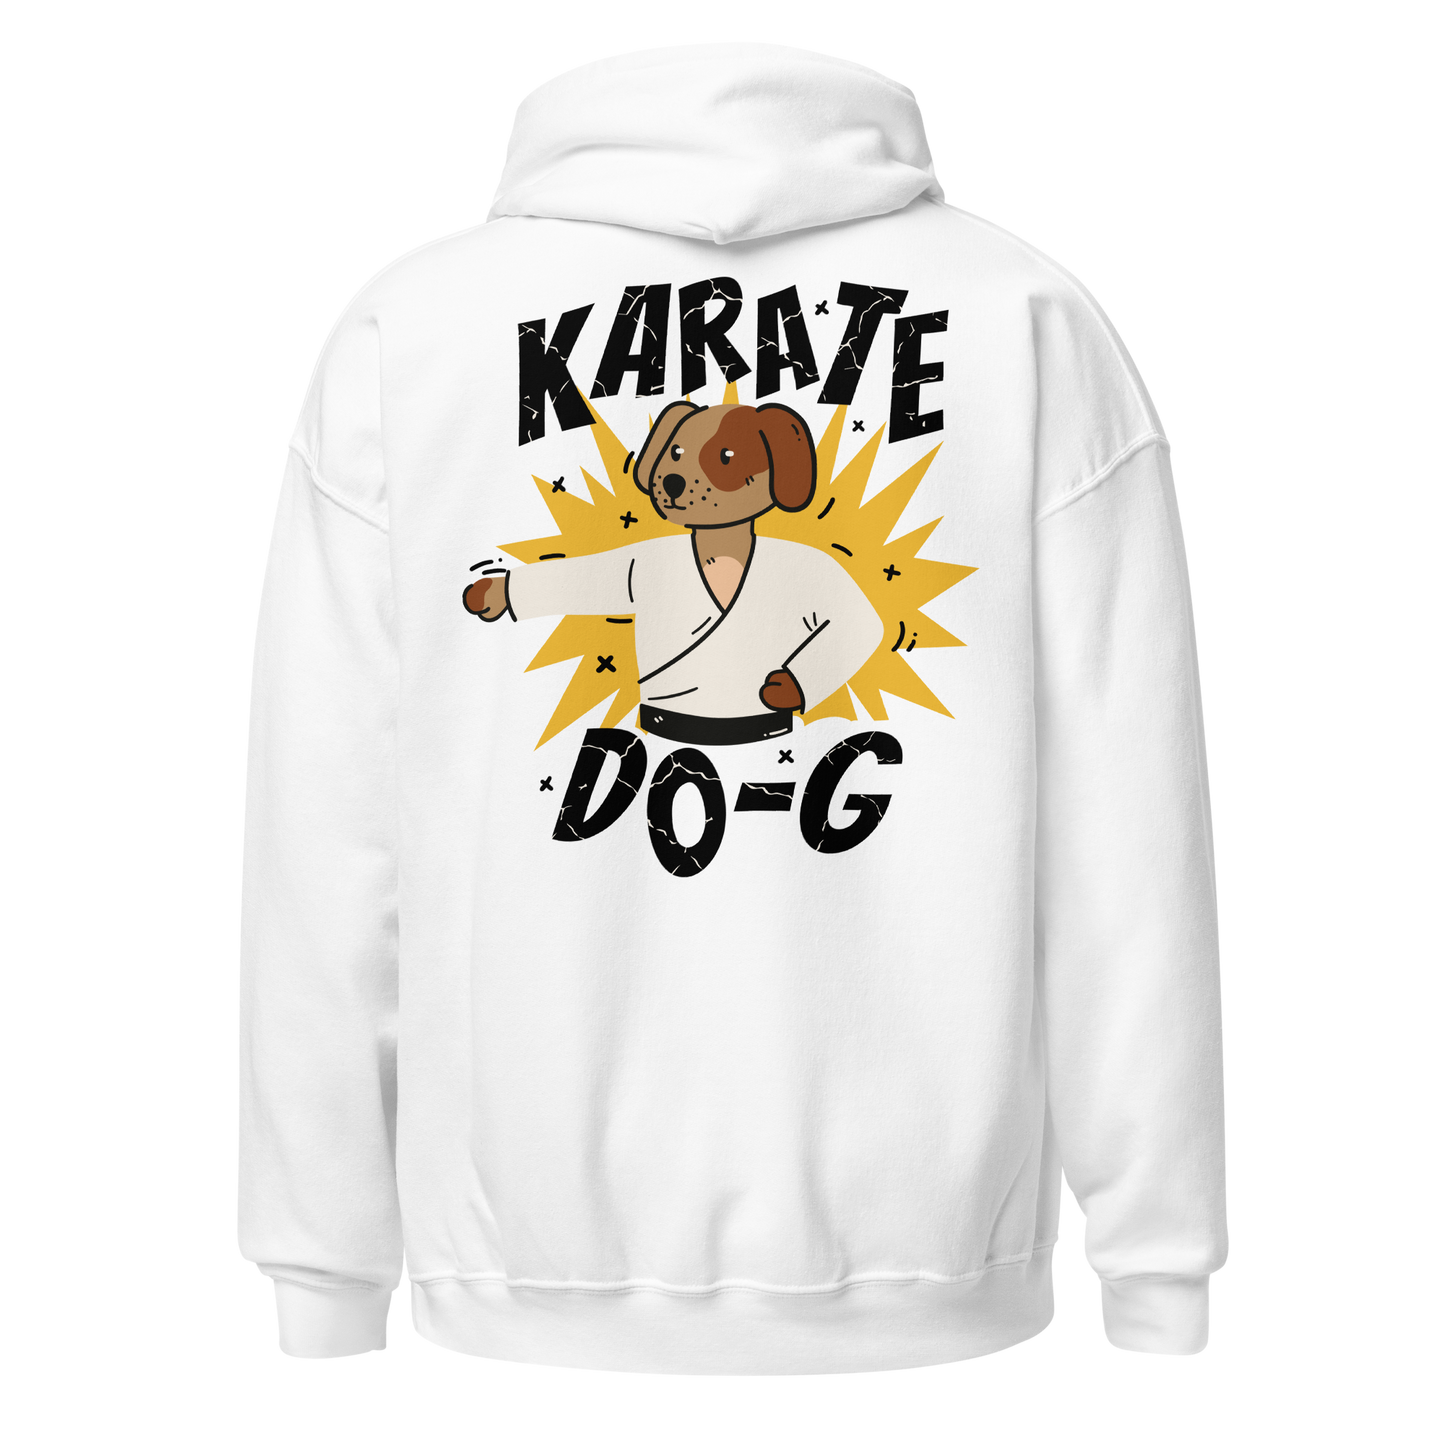 Karate do-g dog | Unisex Hoodie - F&B